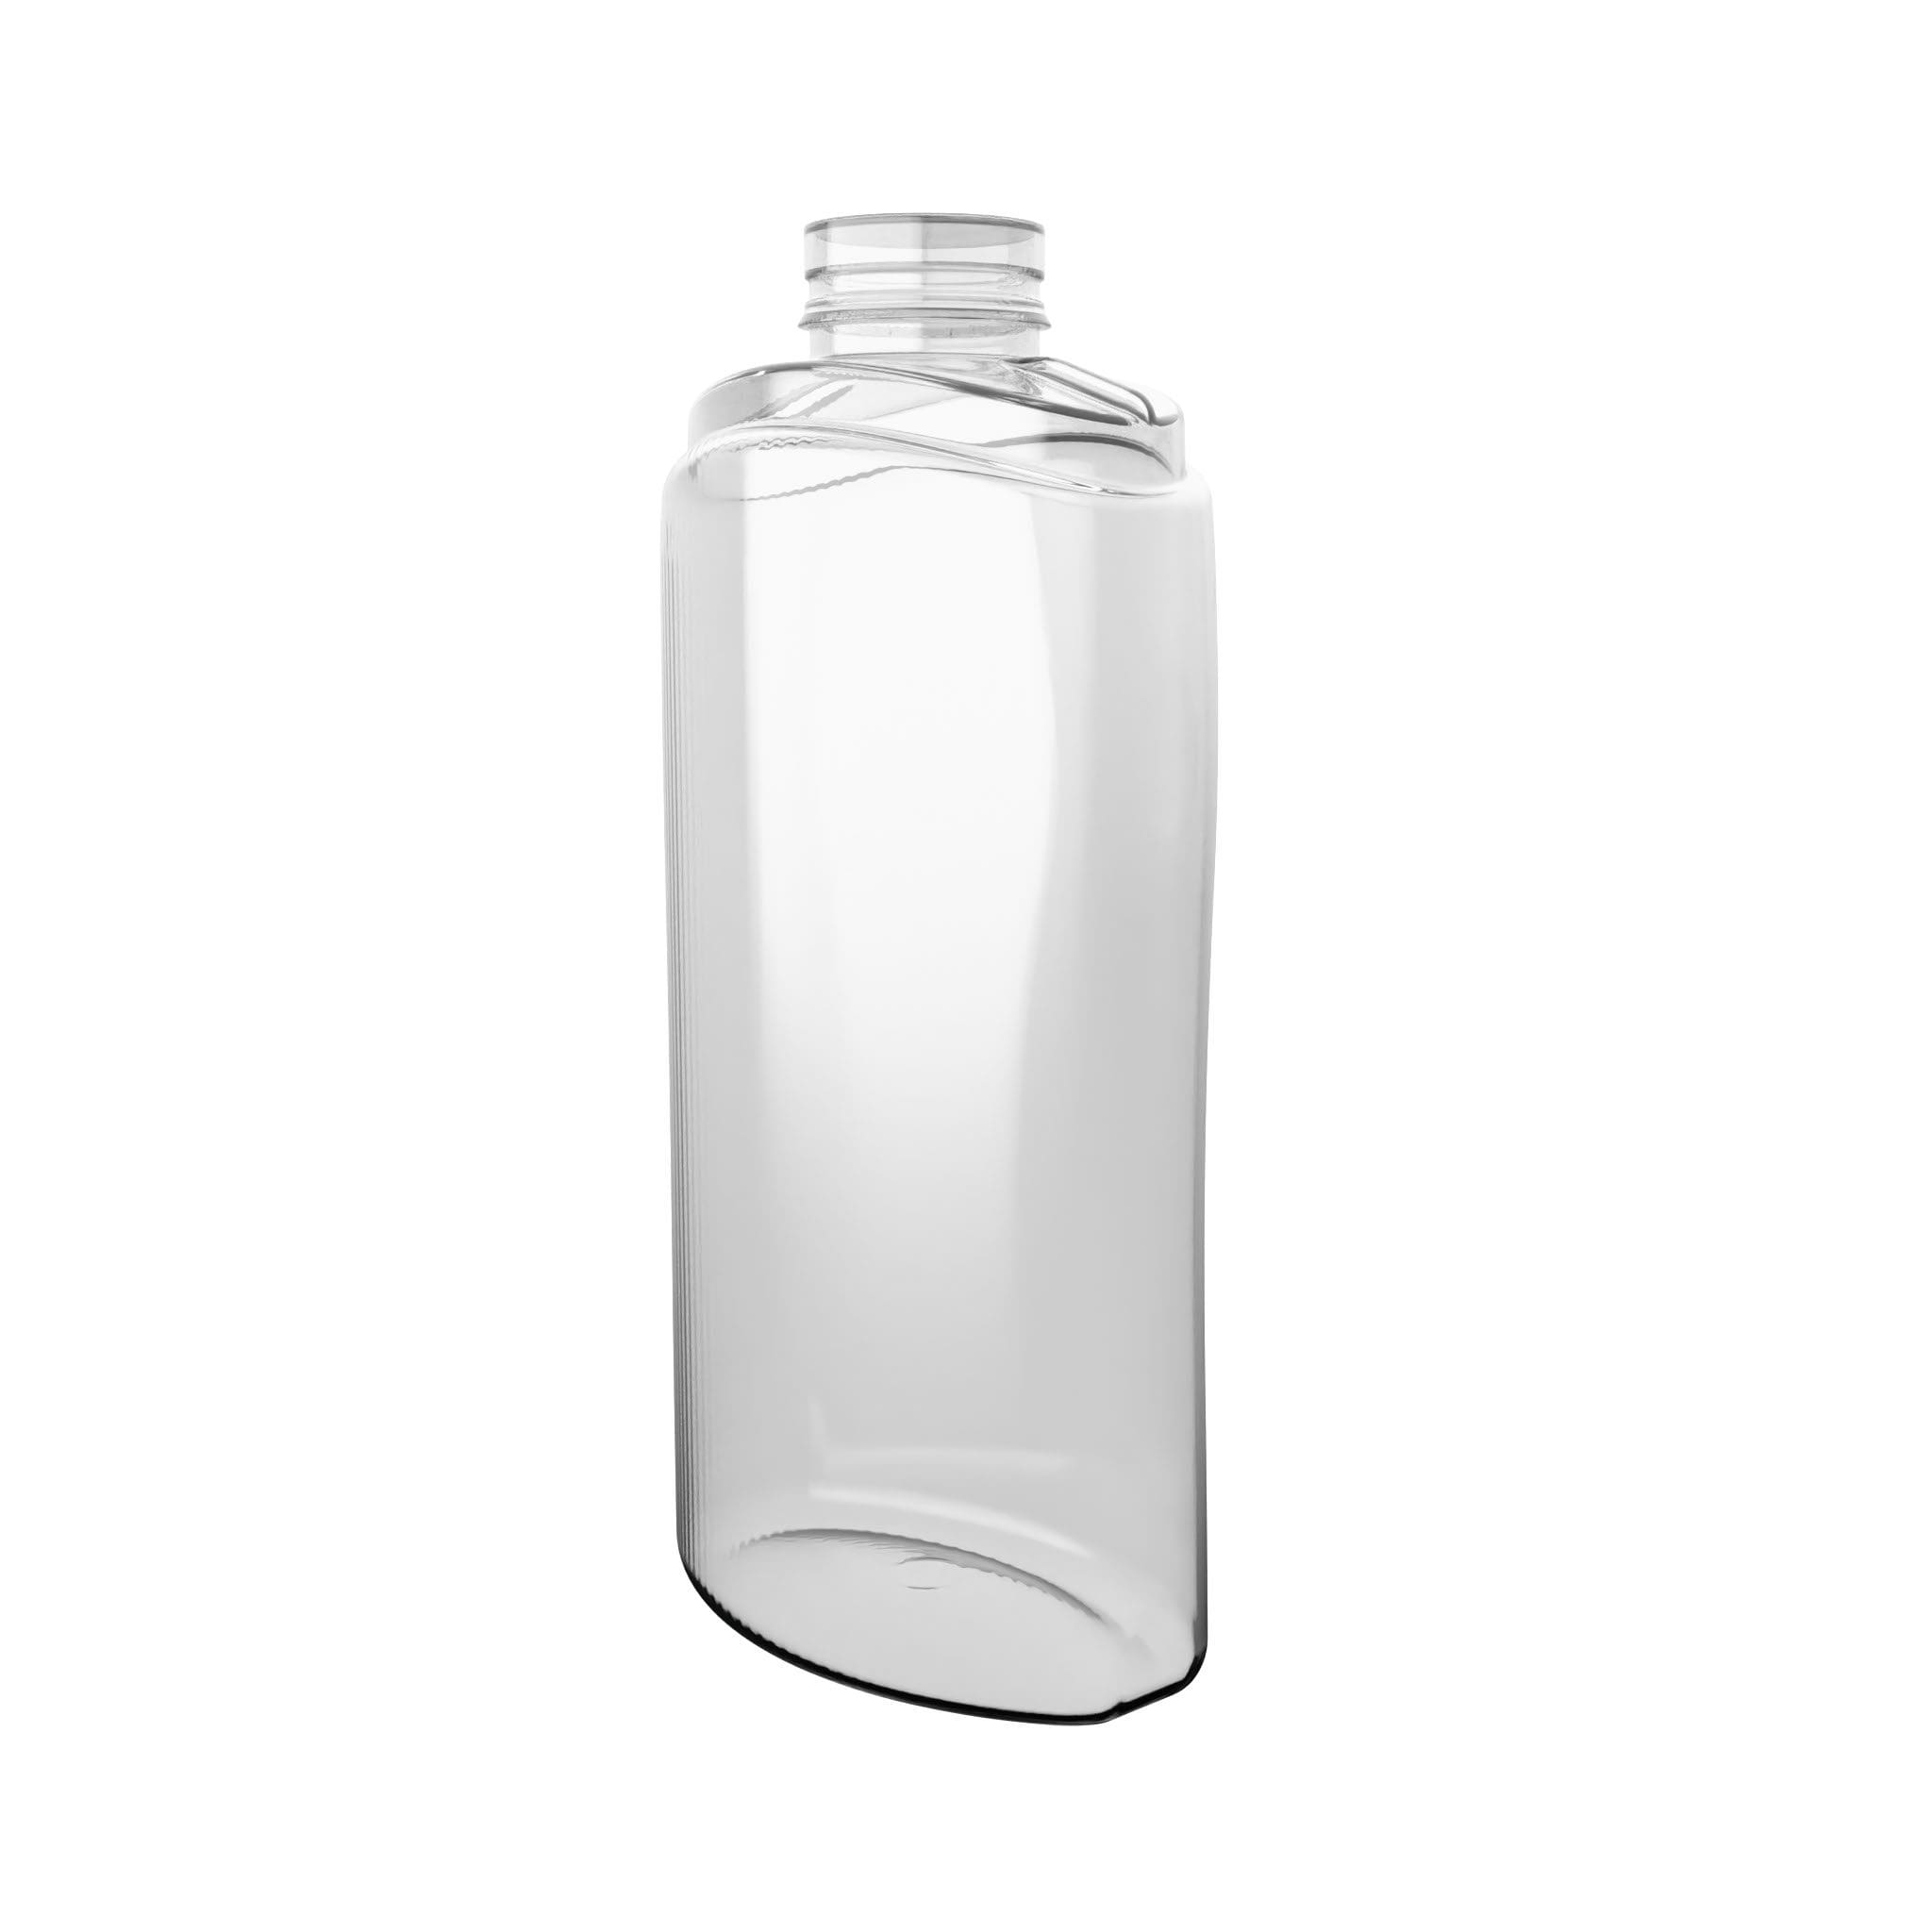 SQUEEZI-SLIM PET-Flasche mit glatter Oberfläche.